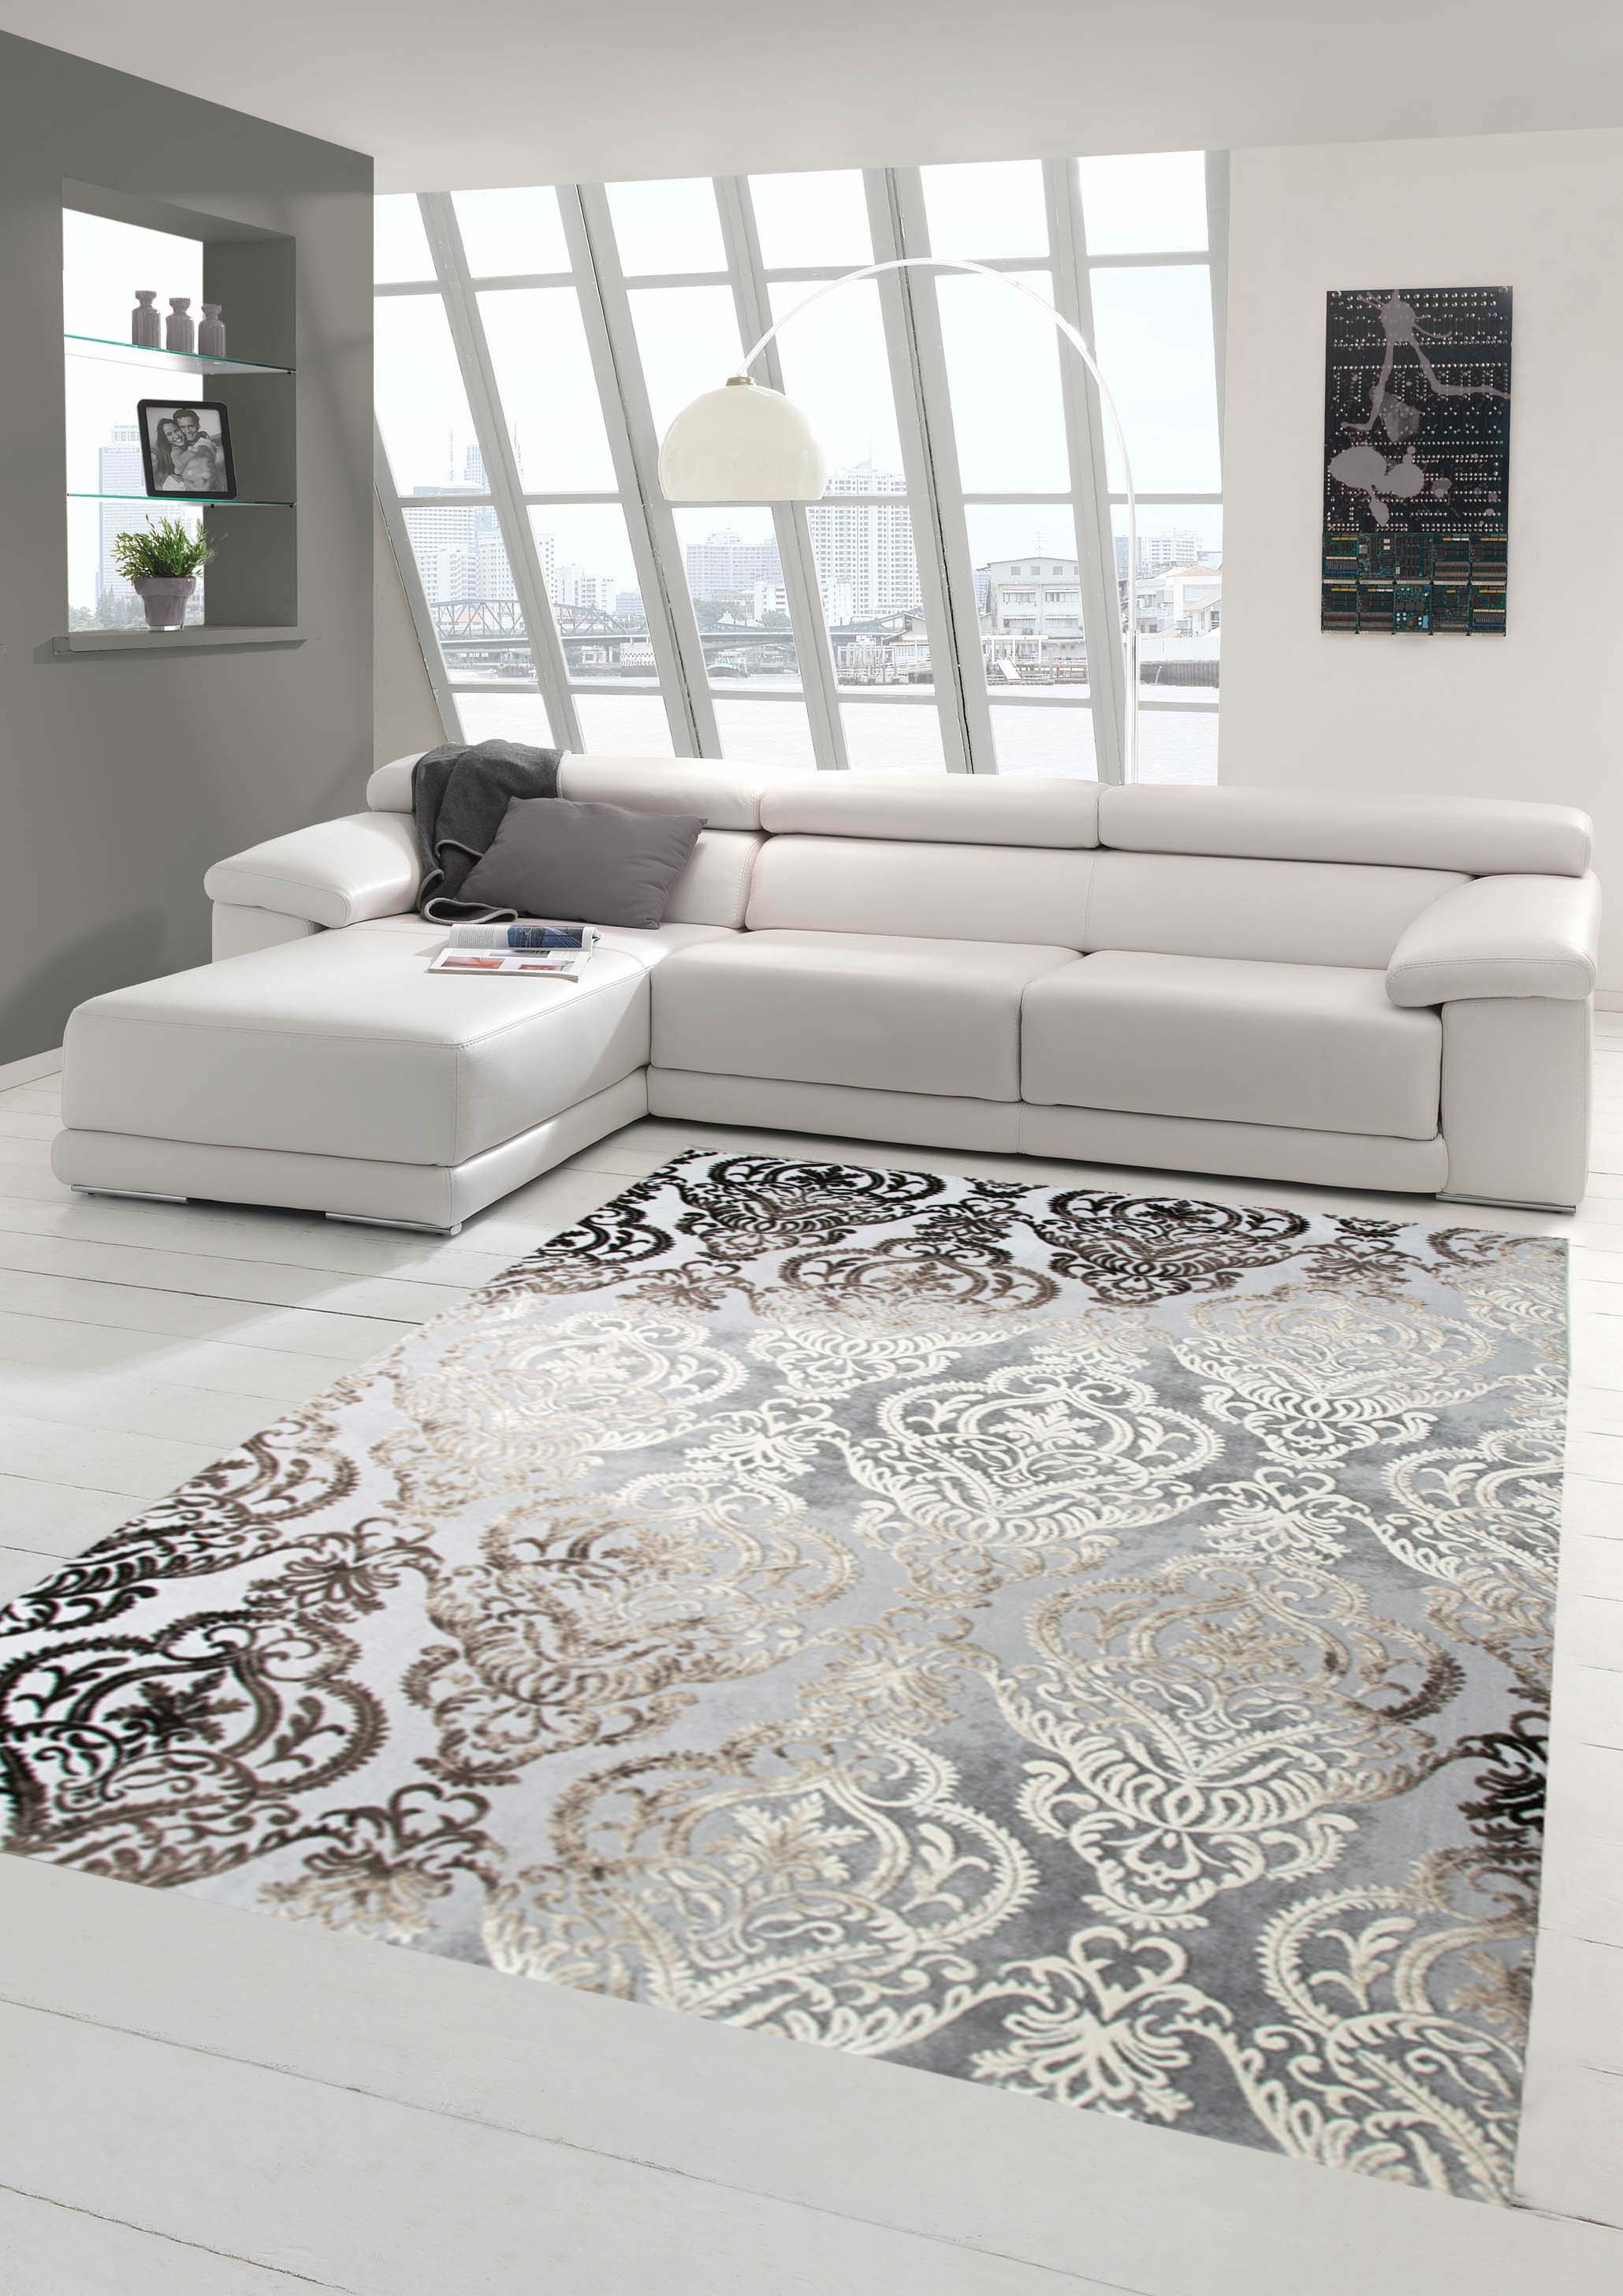 -Traum & High-quality at Teppich designer dreams cheap carpet and carpets: - Modern